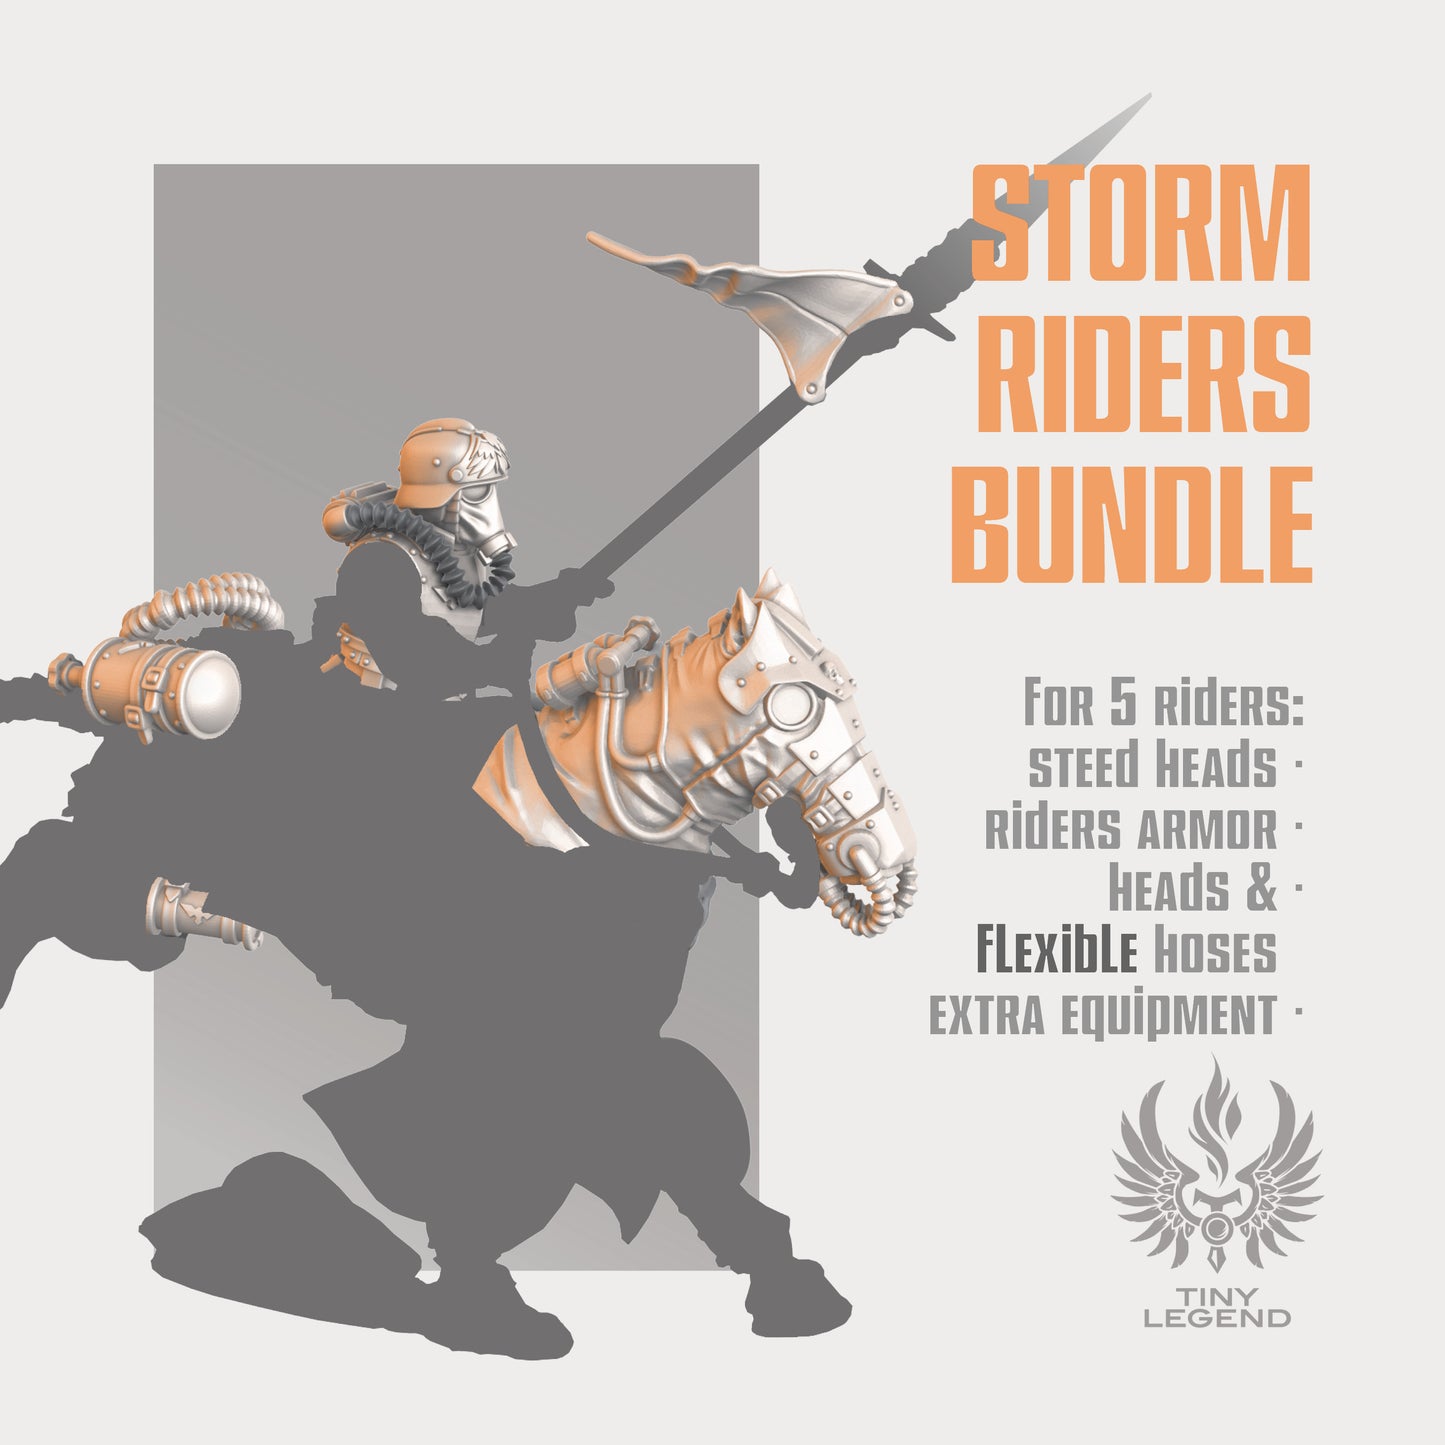 Storm riders bundle